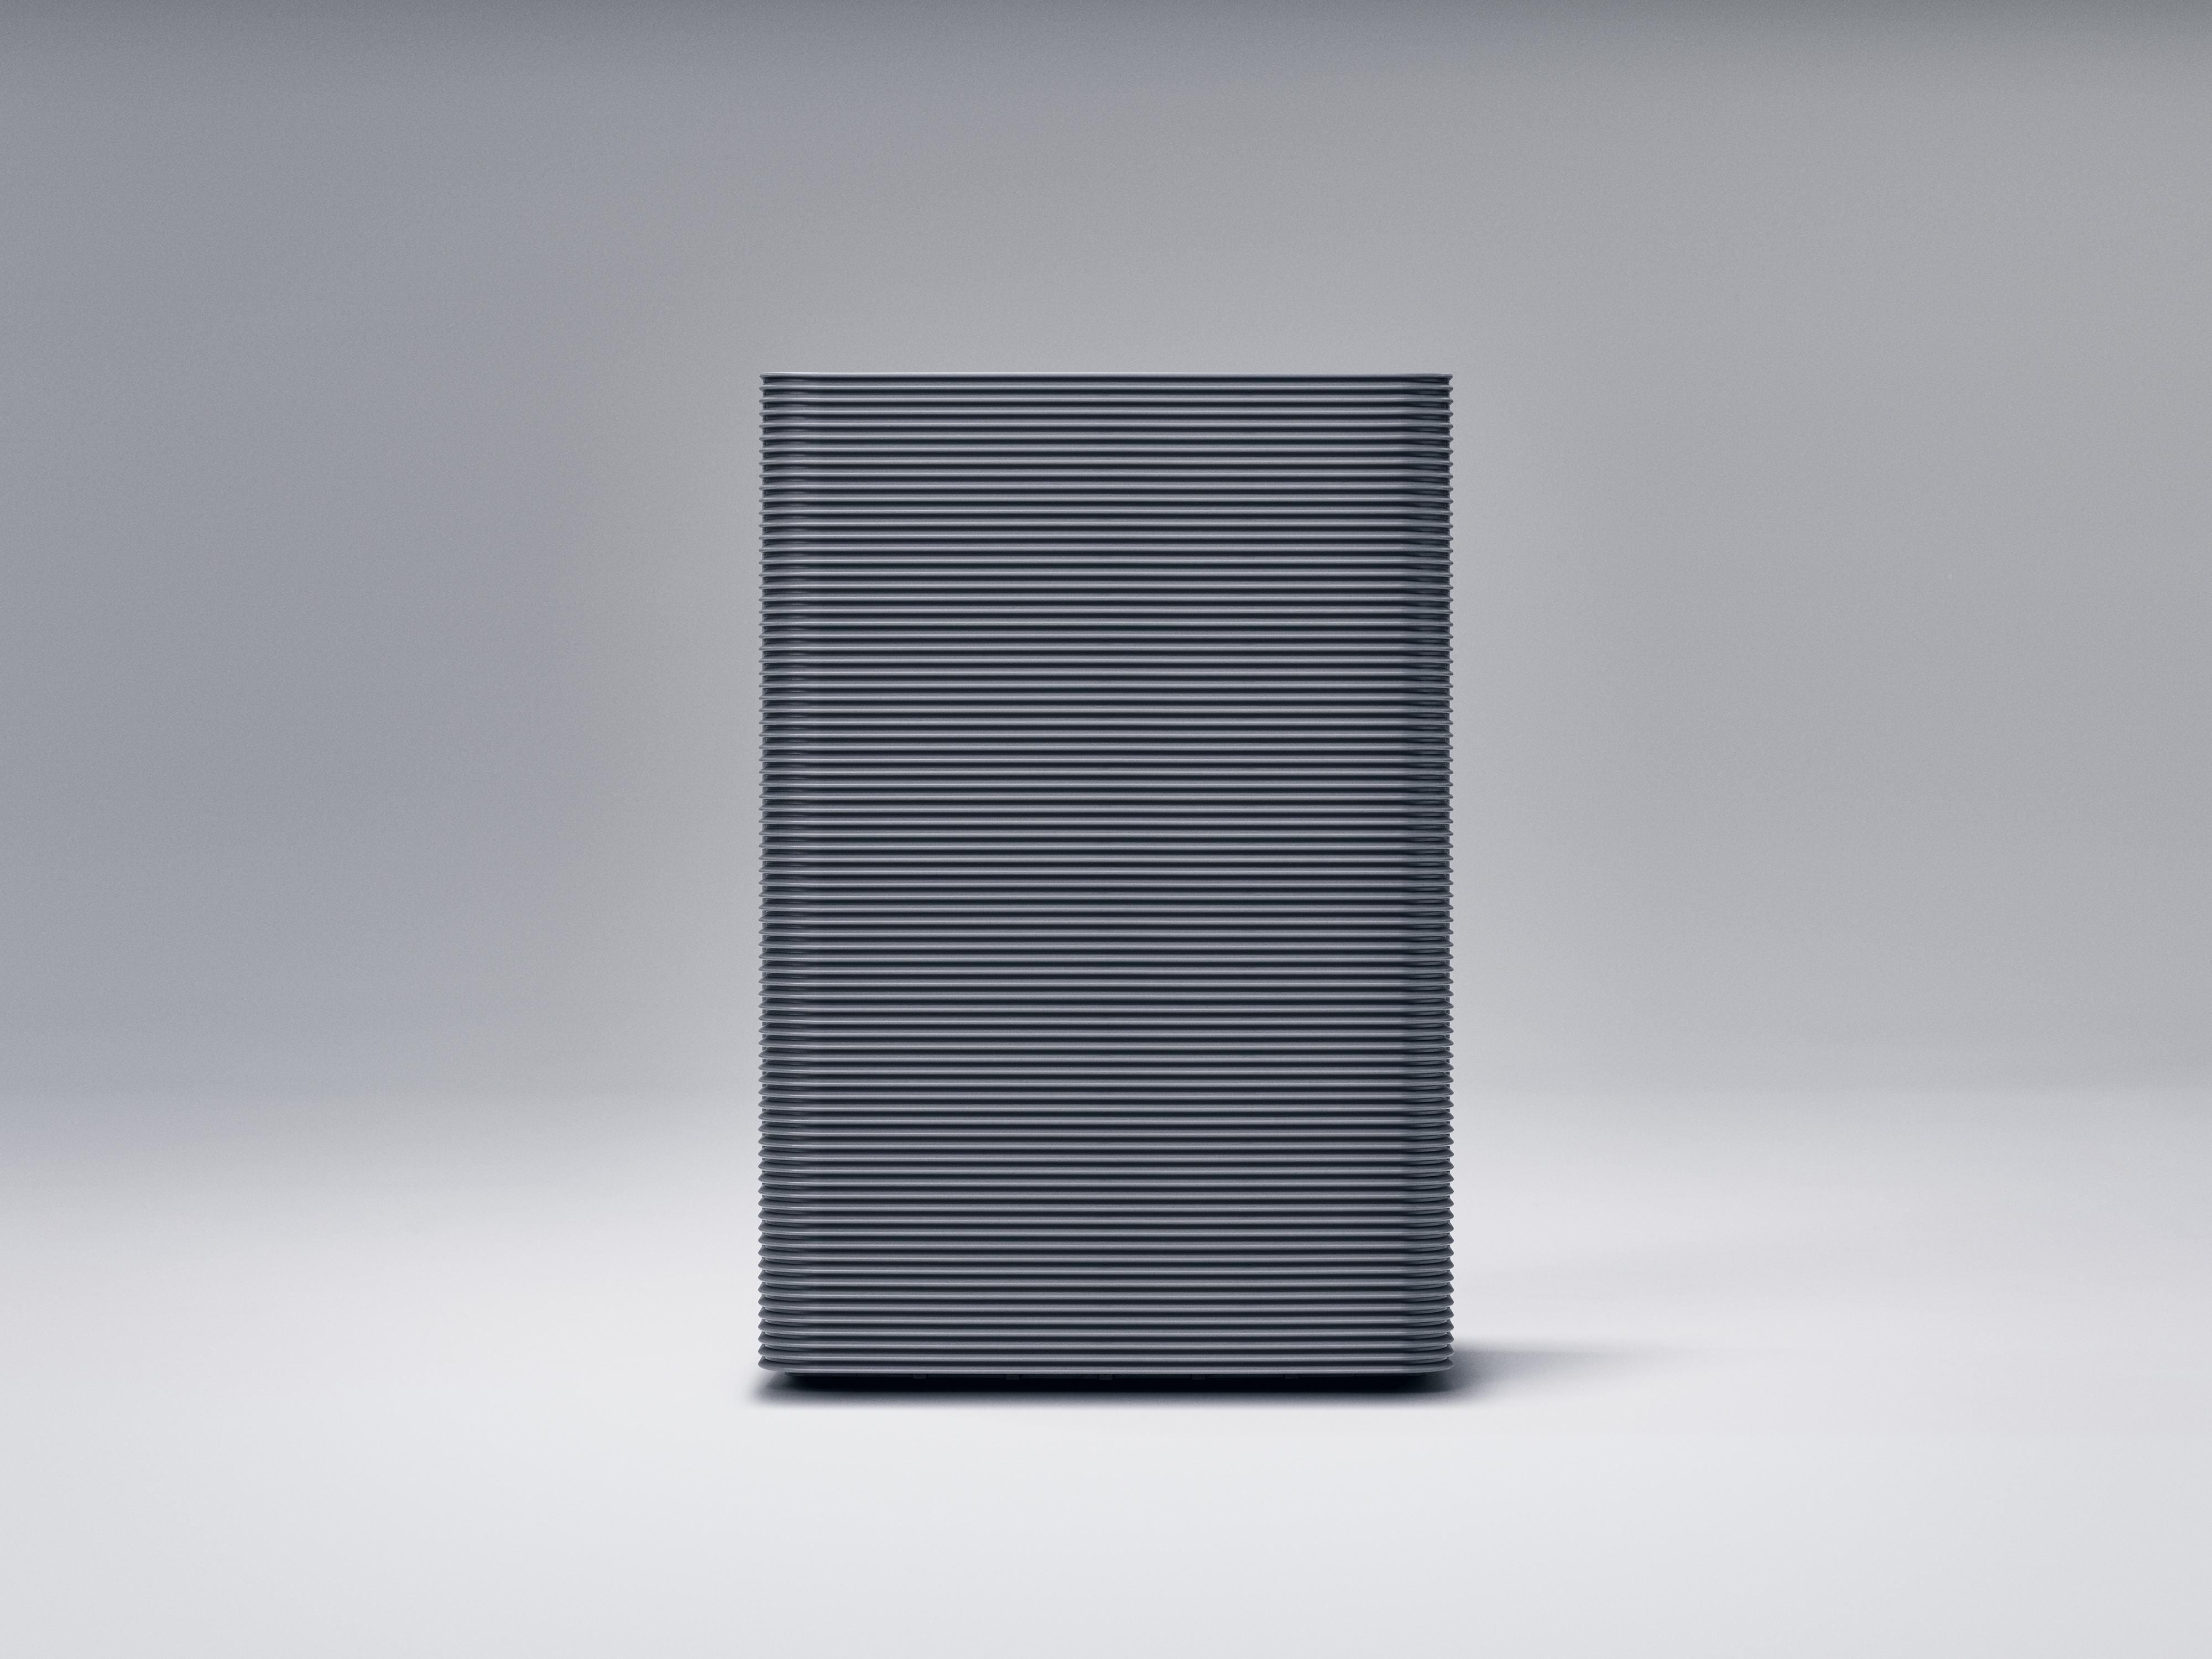 Naoto Fukasawa's dark gray rectangular minimalist air purifier